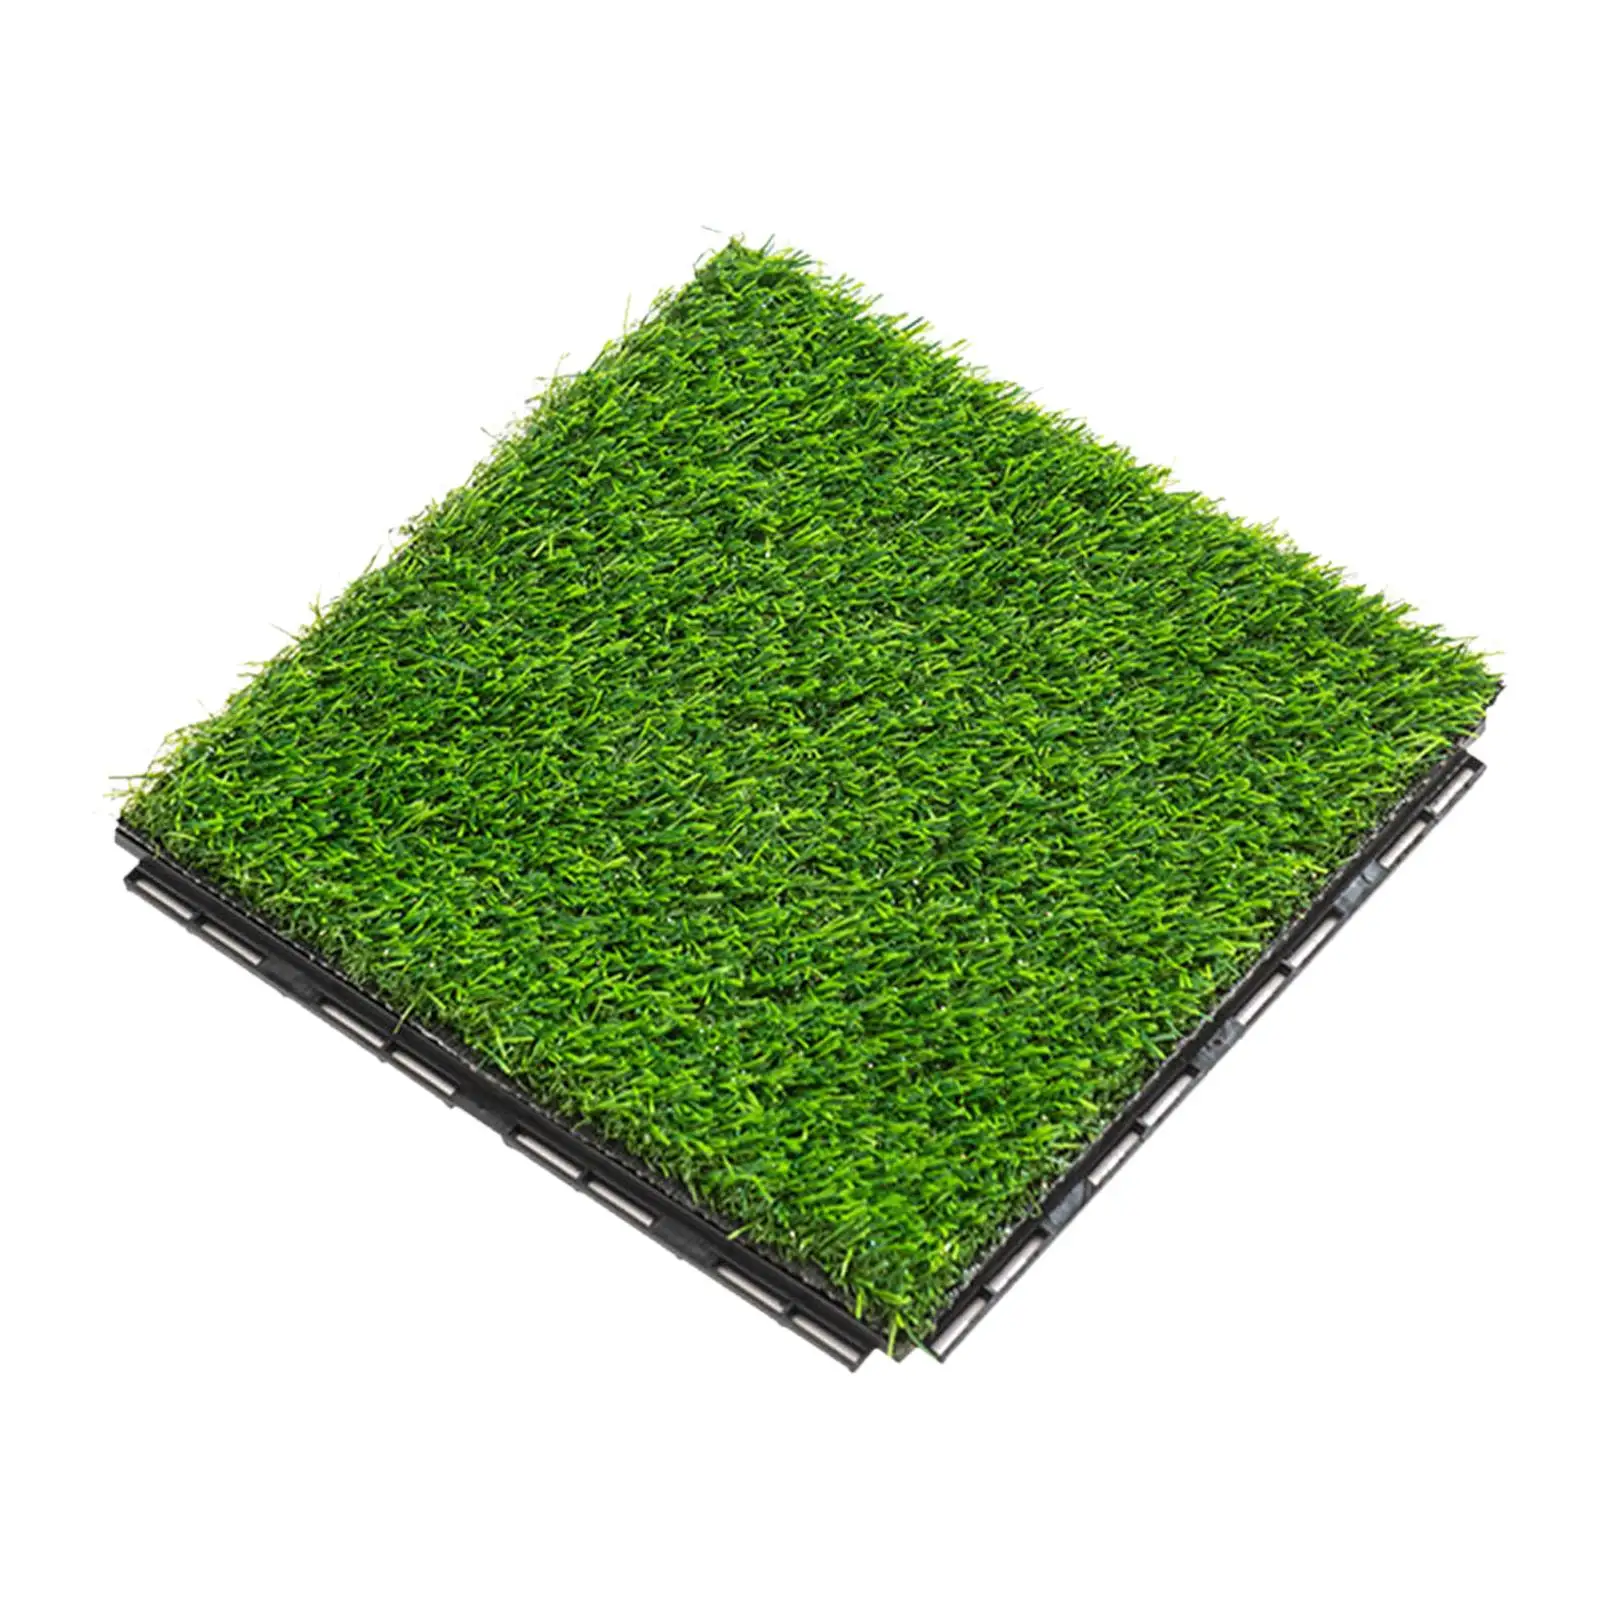 Artificial Grass Draining Floor Mat Grass Carpet Grass Turf Square Realistic for garden Lawn Outdoor Accessory